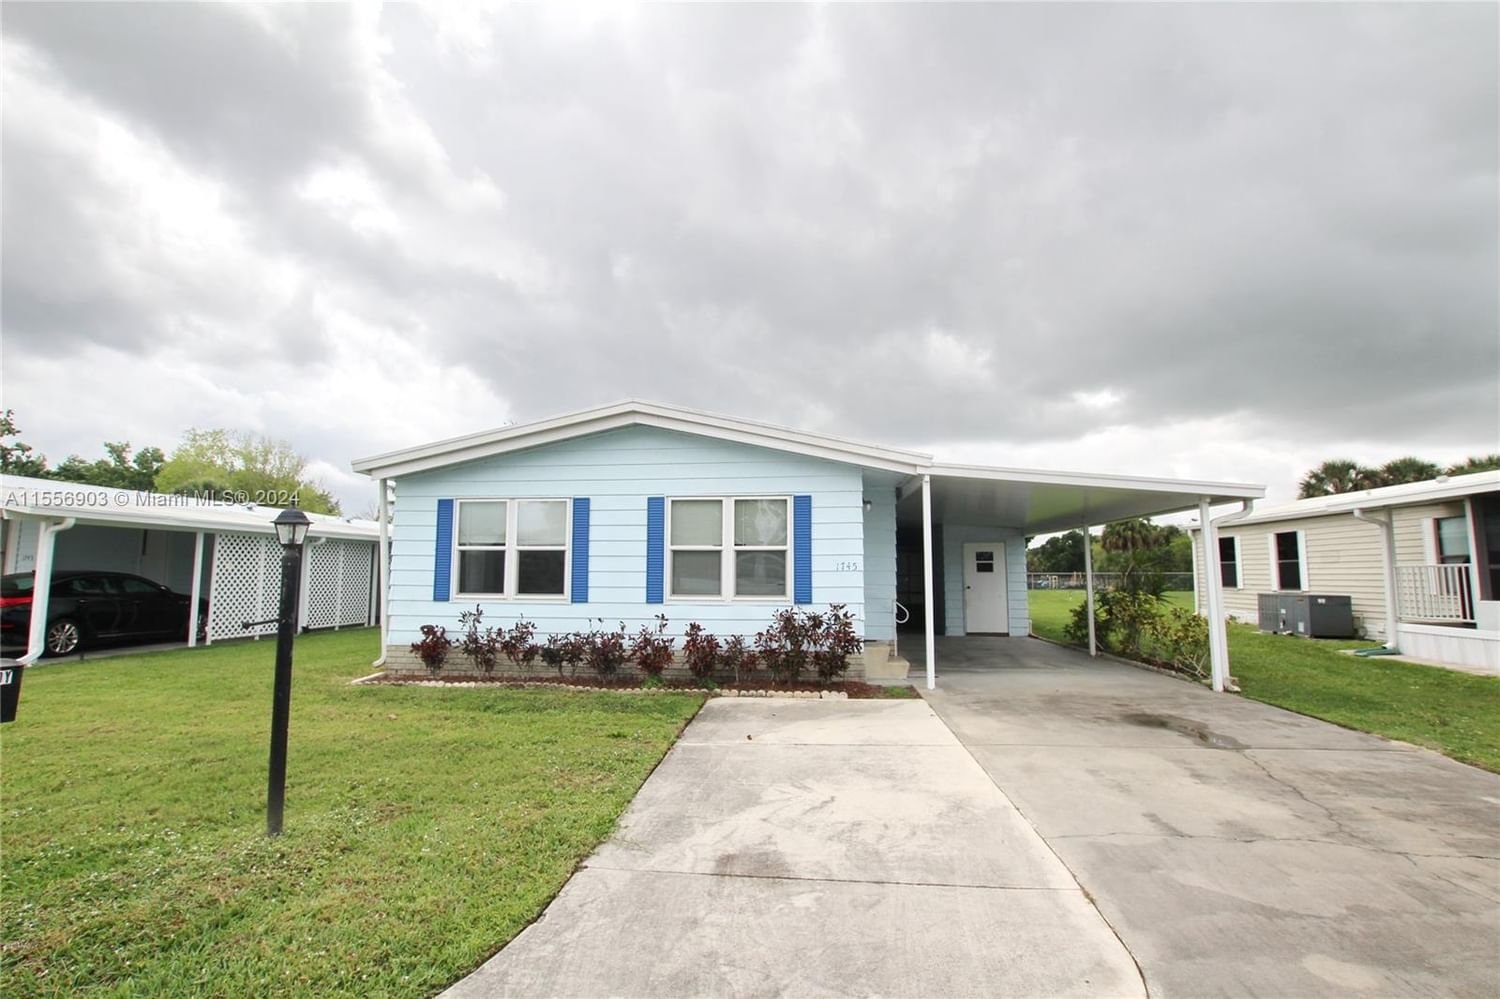 Real estate property located at 1745 35th Circle, Okeechobee County, Seminole Cove, Okeechobee, FL